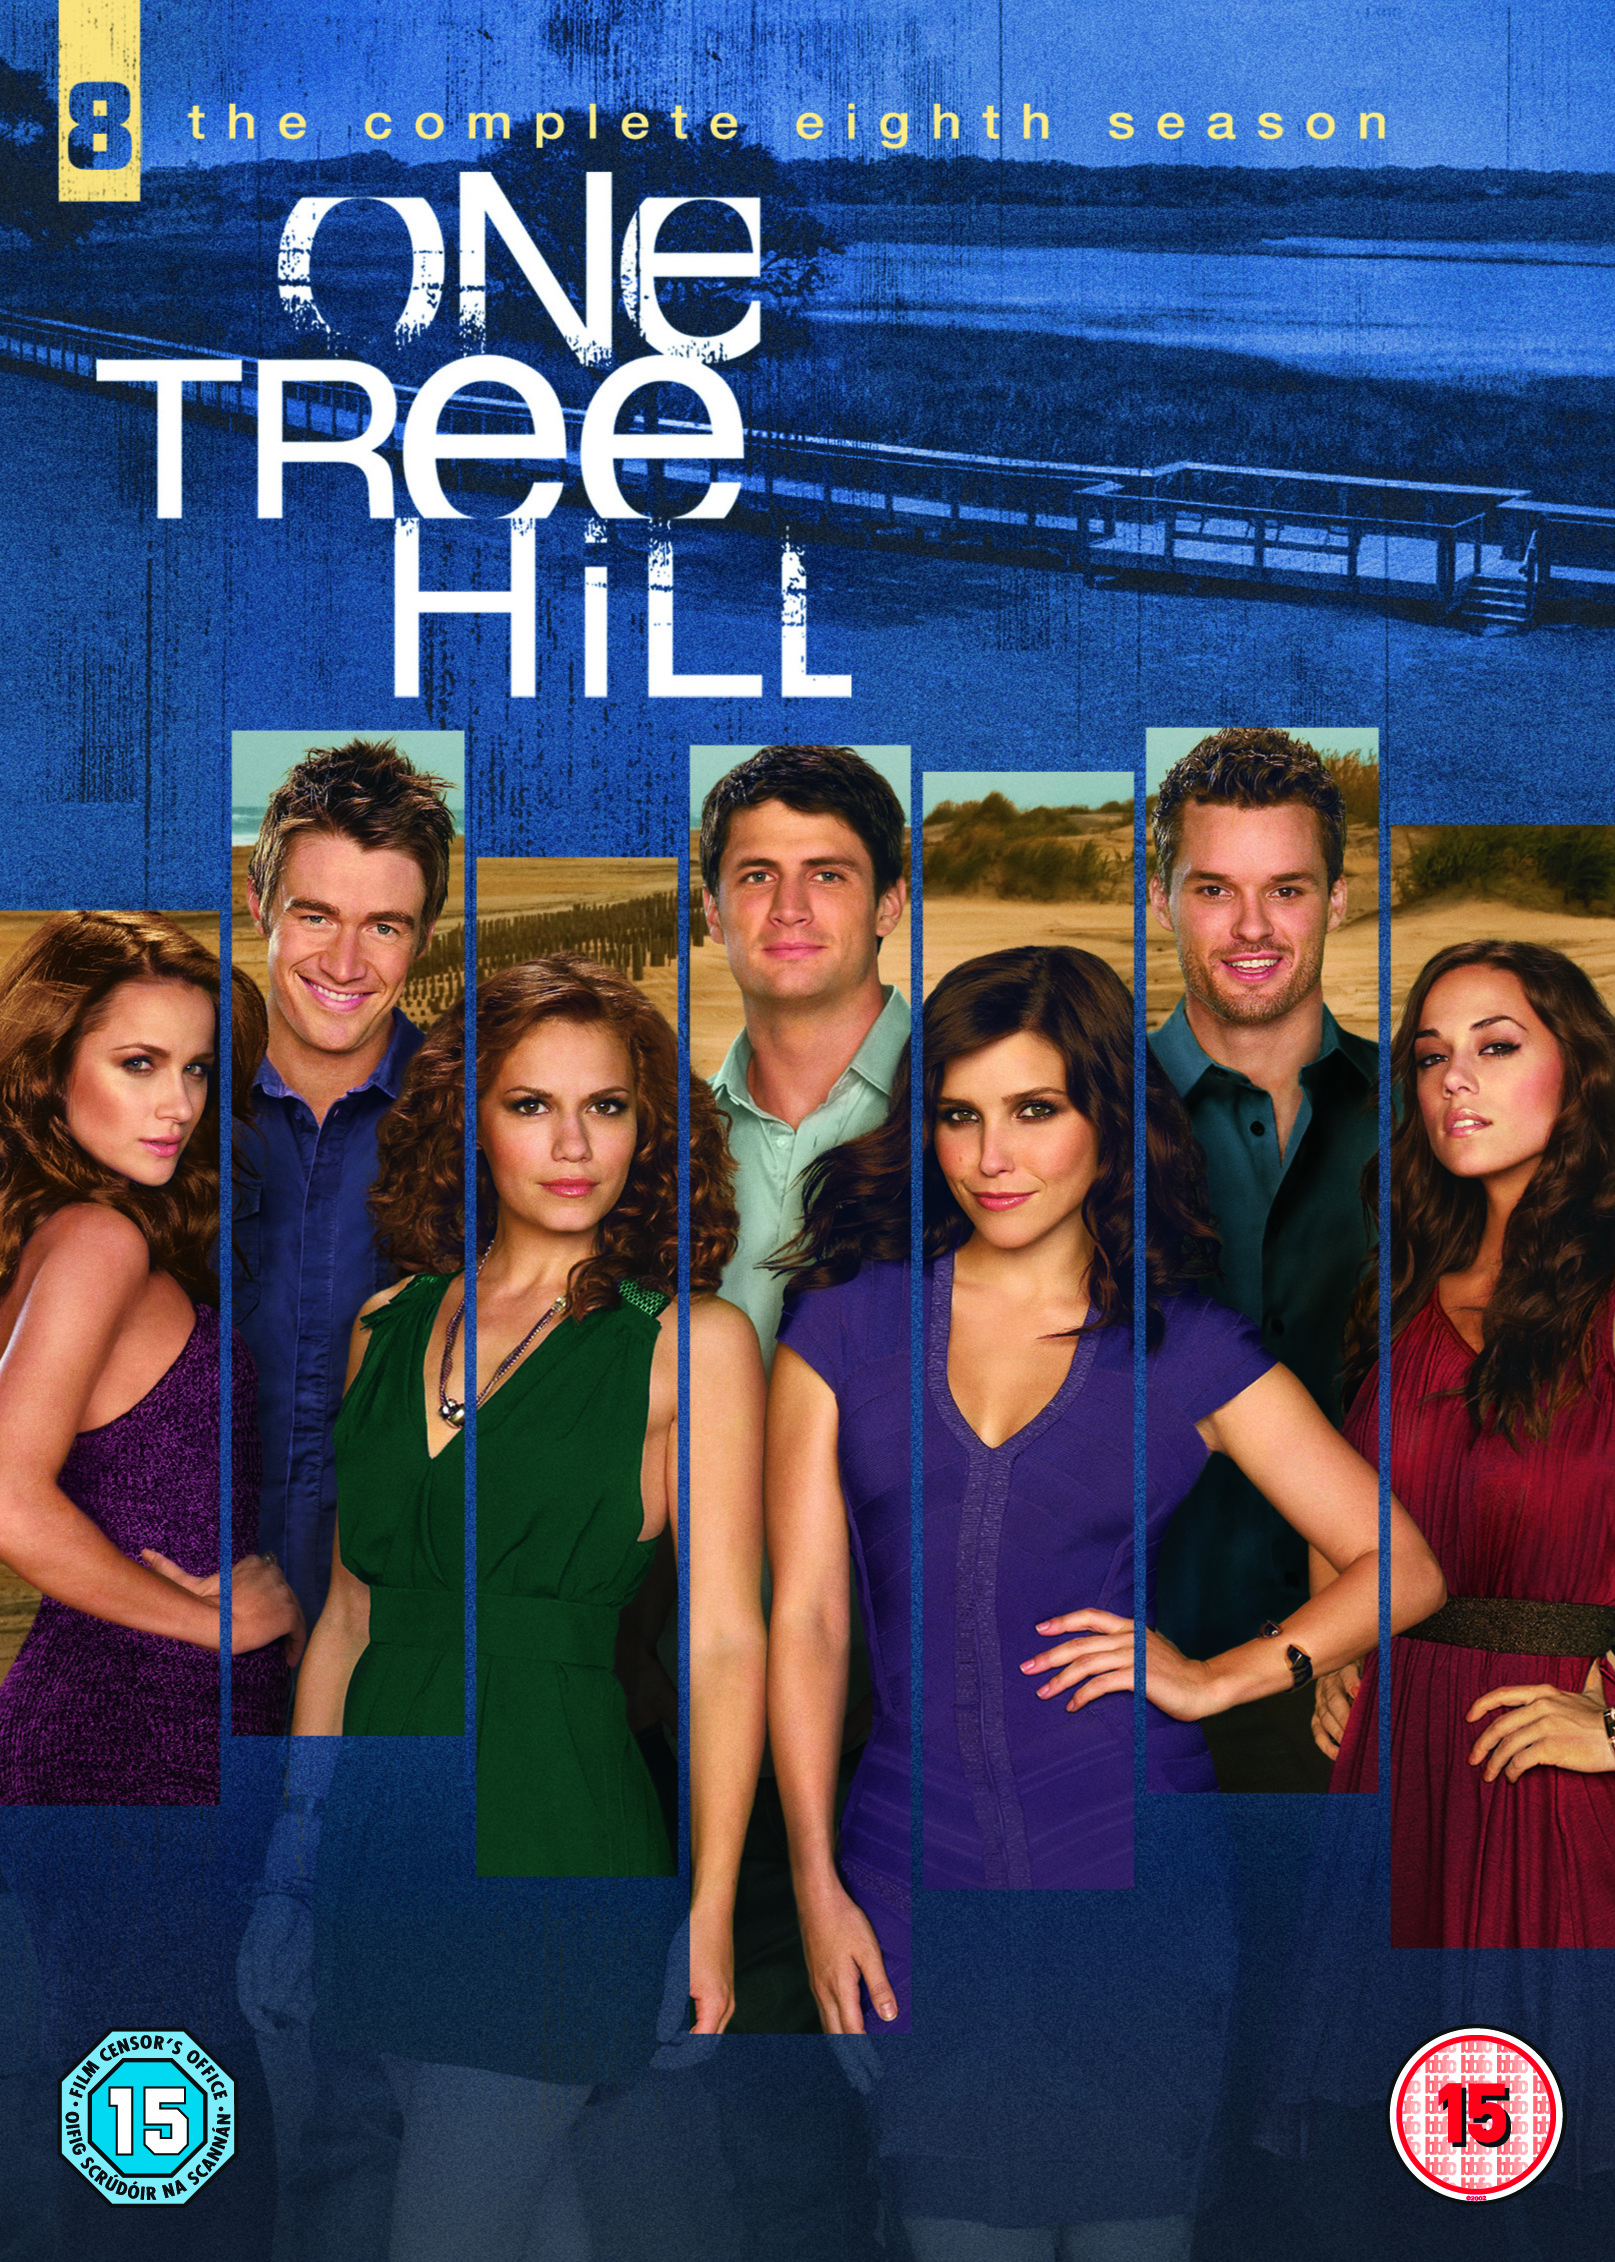 One Tree Hill – Season 8 DVD Review - HeyUGuys